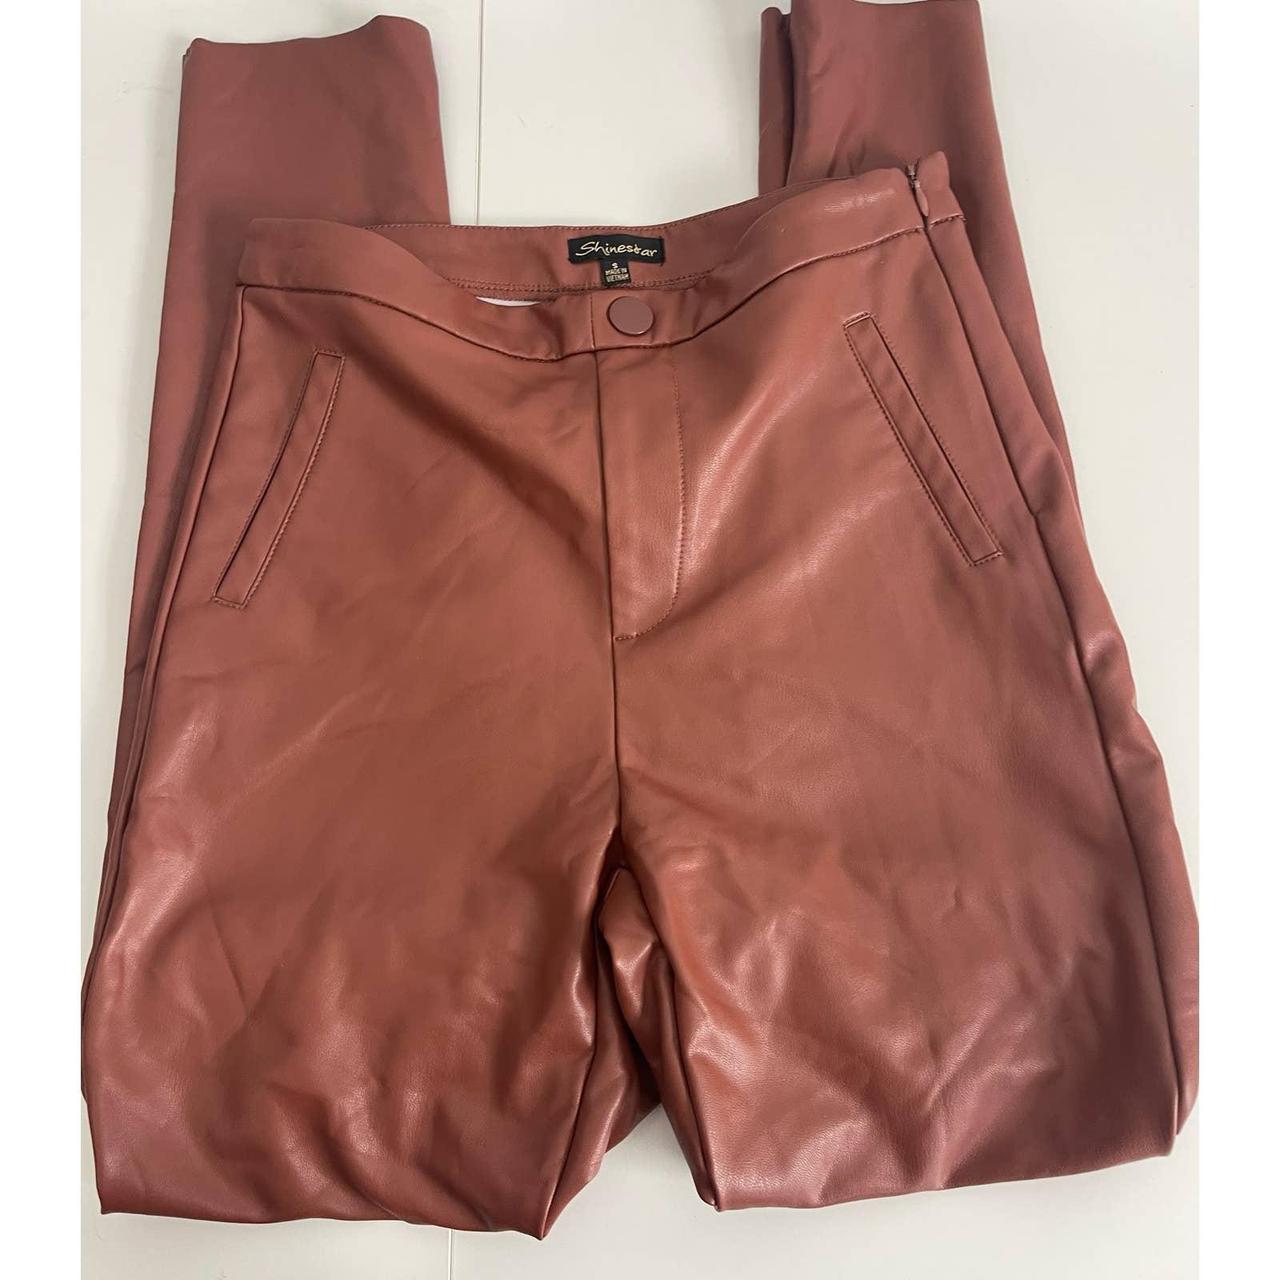 Shinestar Size XL Faux Leather Pants Zip Belt Inseam 27” Pocket #1401 | eBay